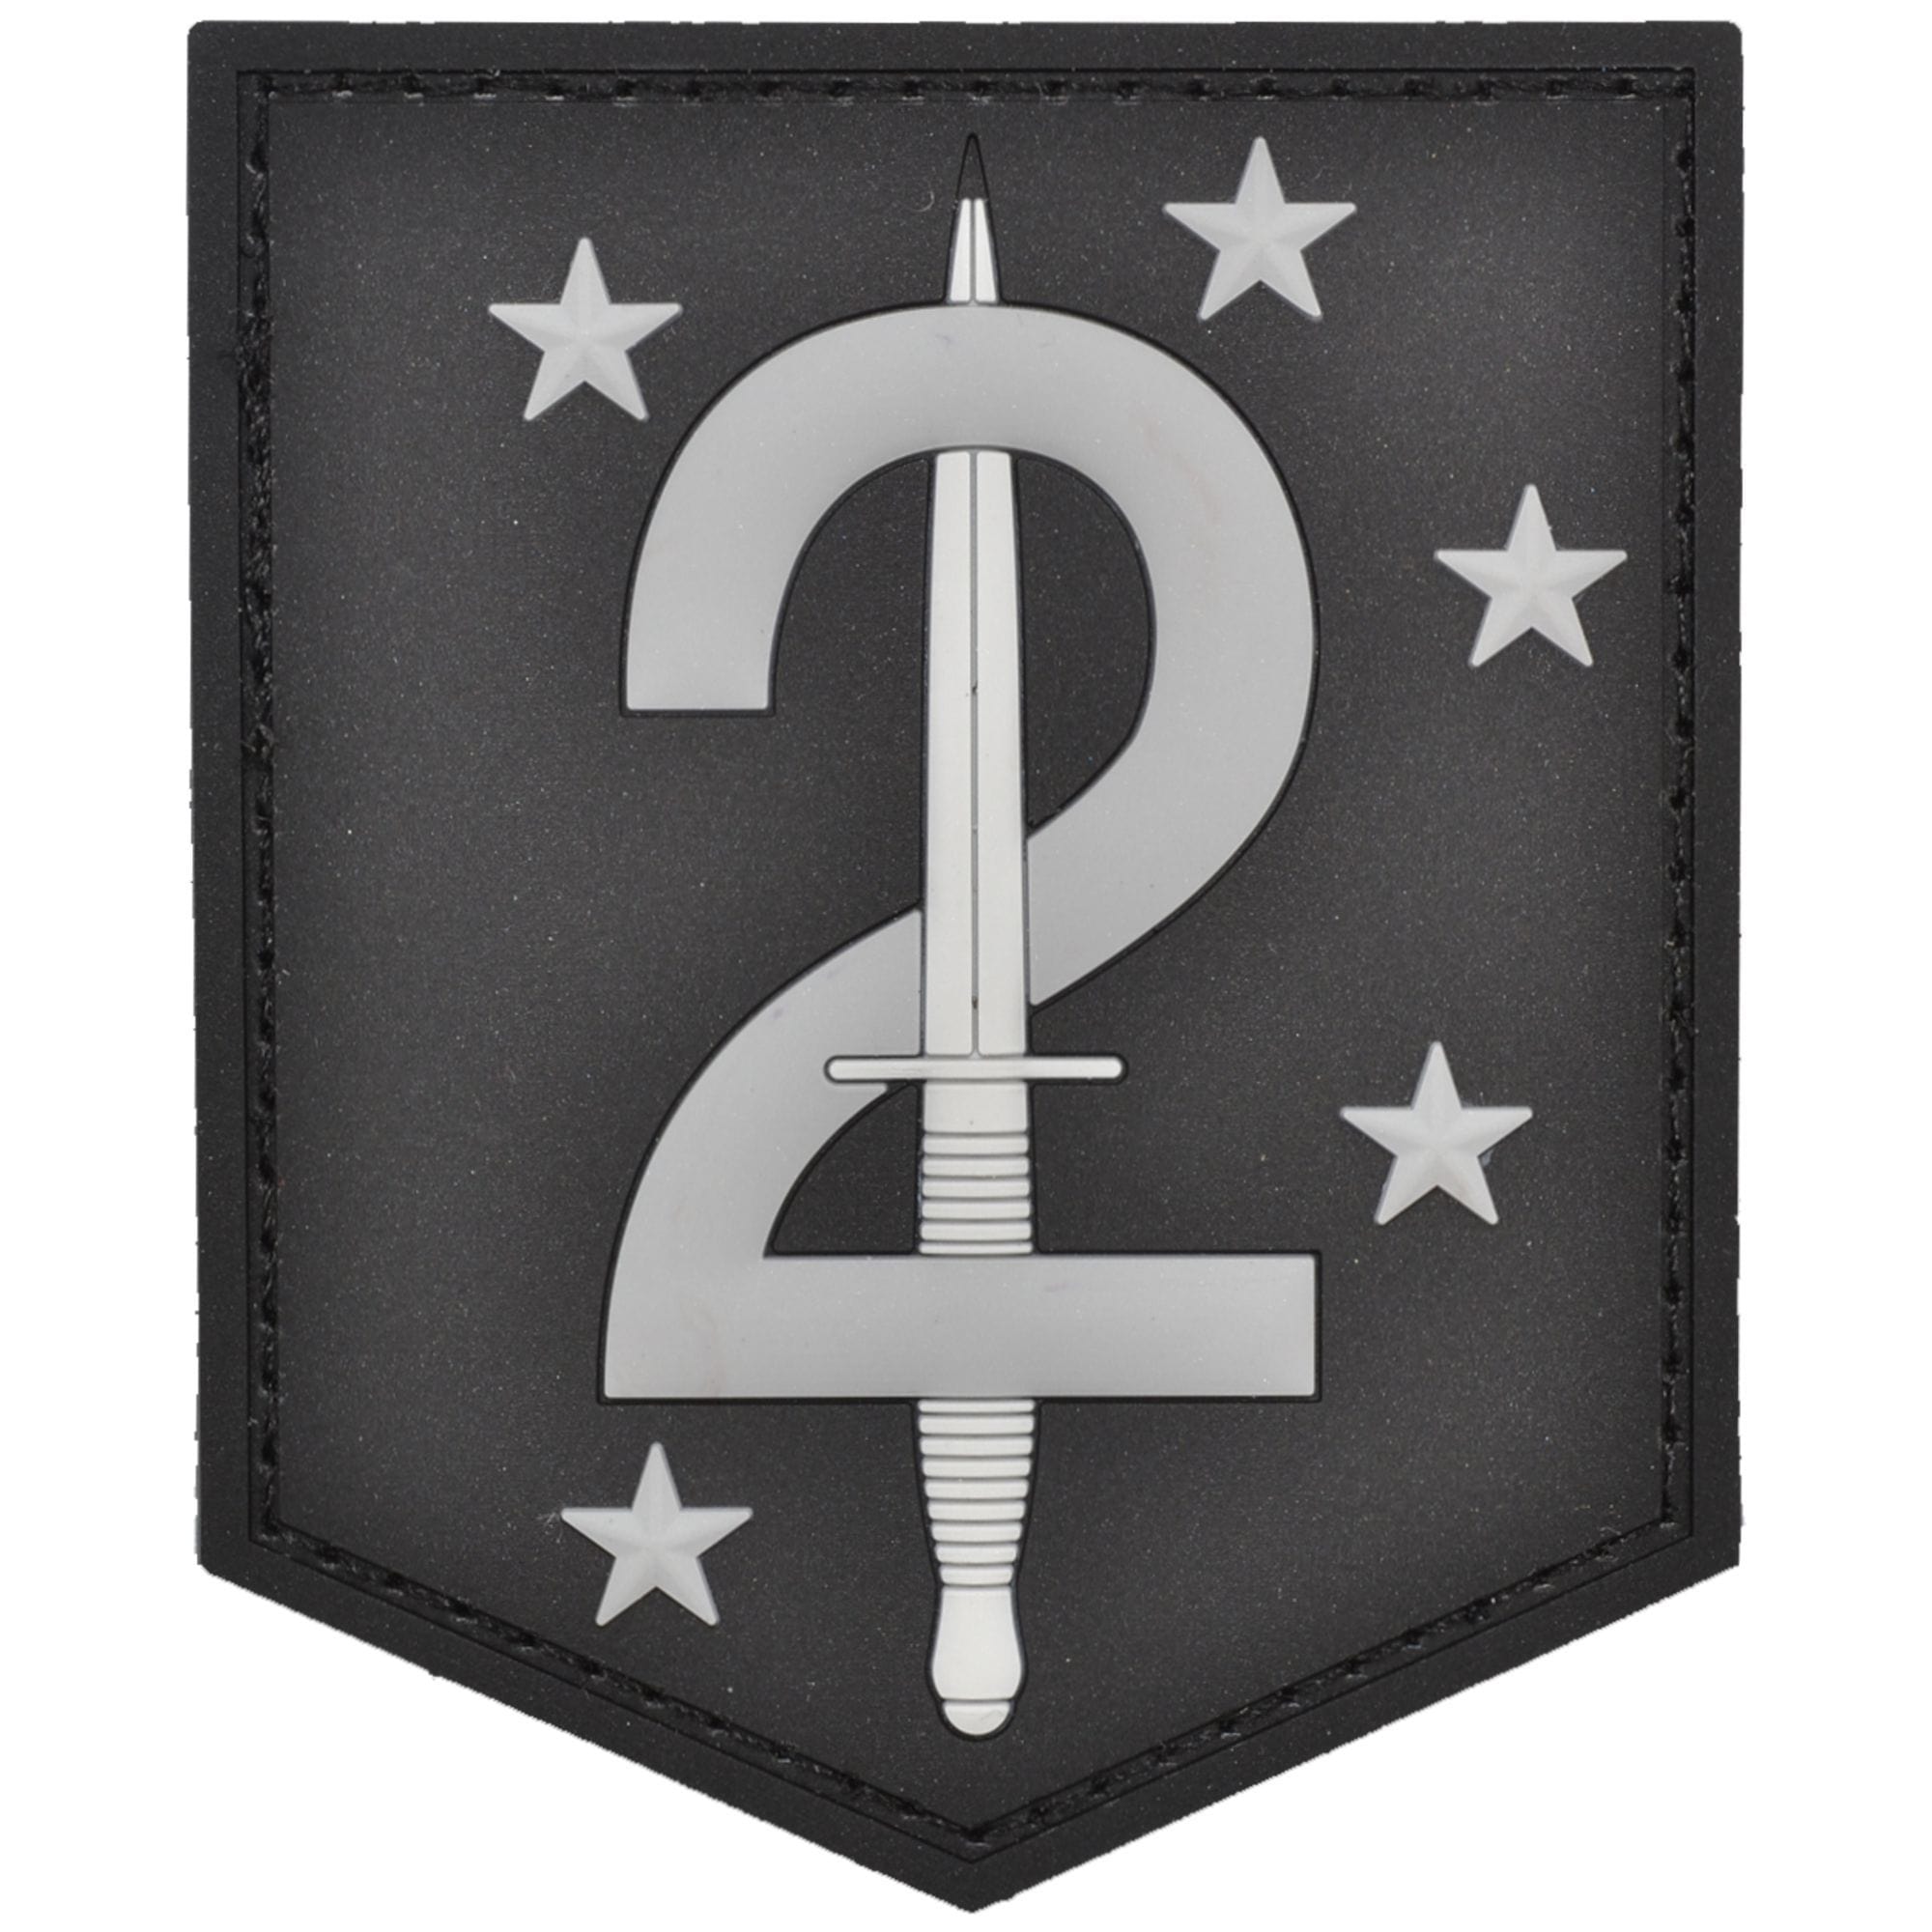 Tactical Gear Junkie Patches Black / Silver 2d Marine Raider Battalion MarSOC - 2.5x3 inch PVC Patch - Multiple Colors